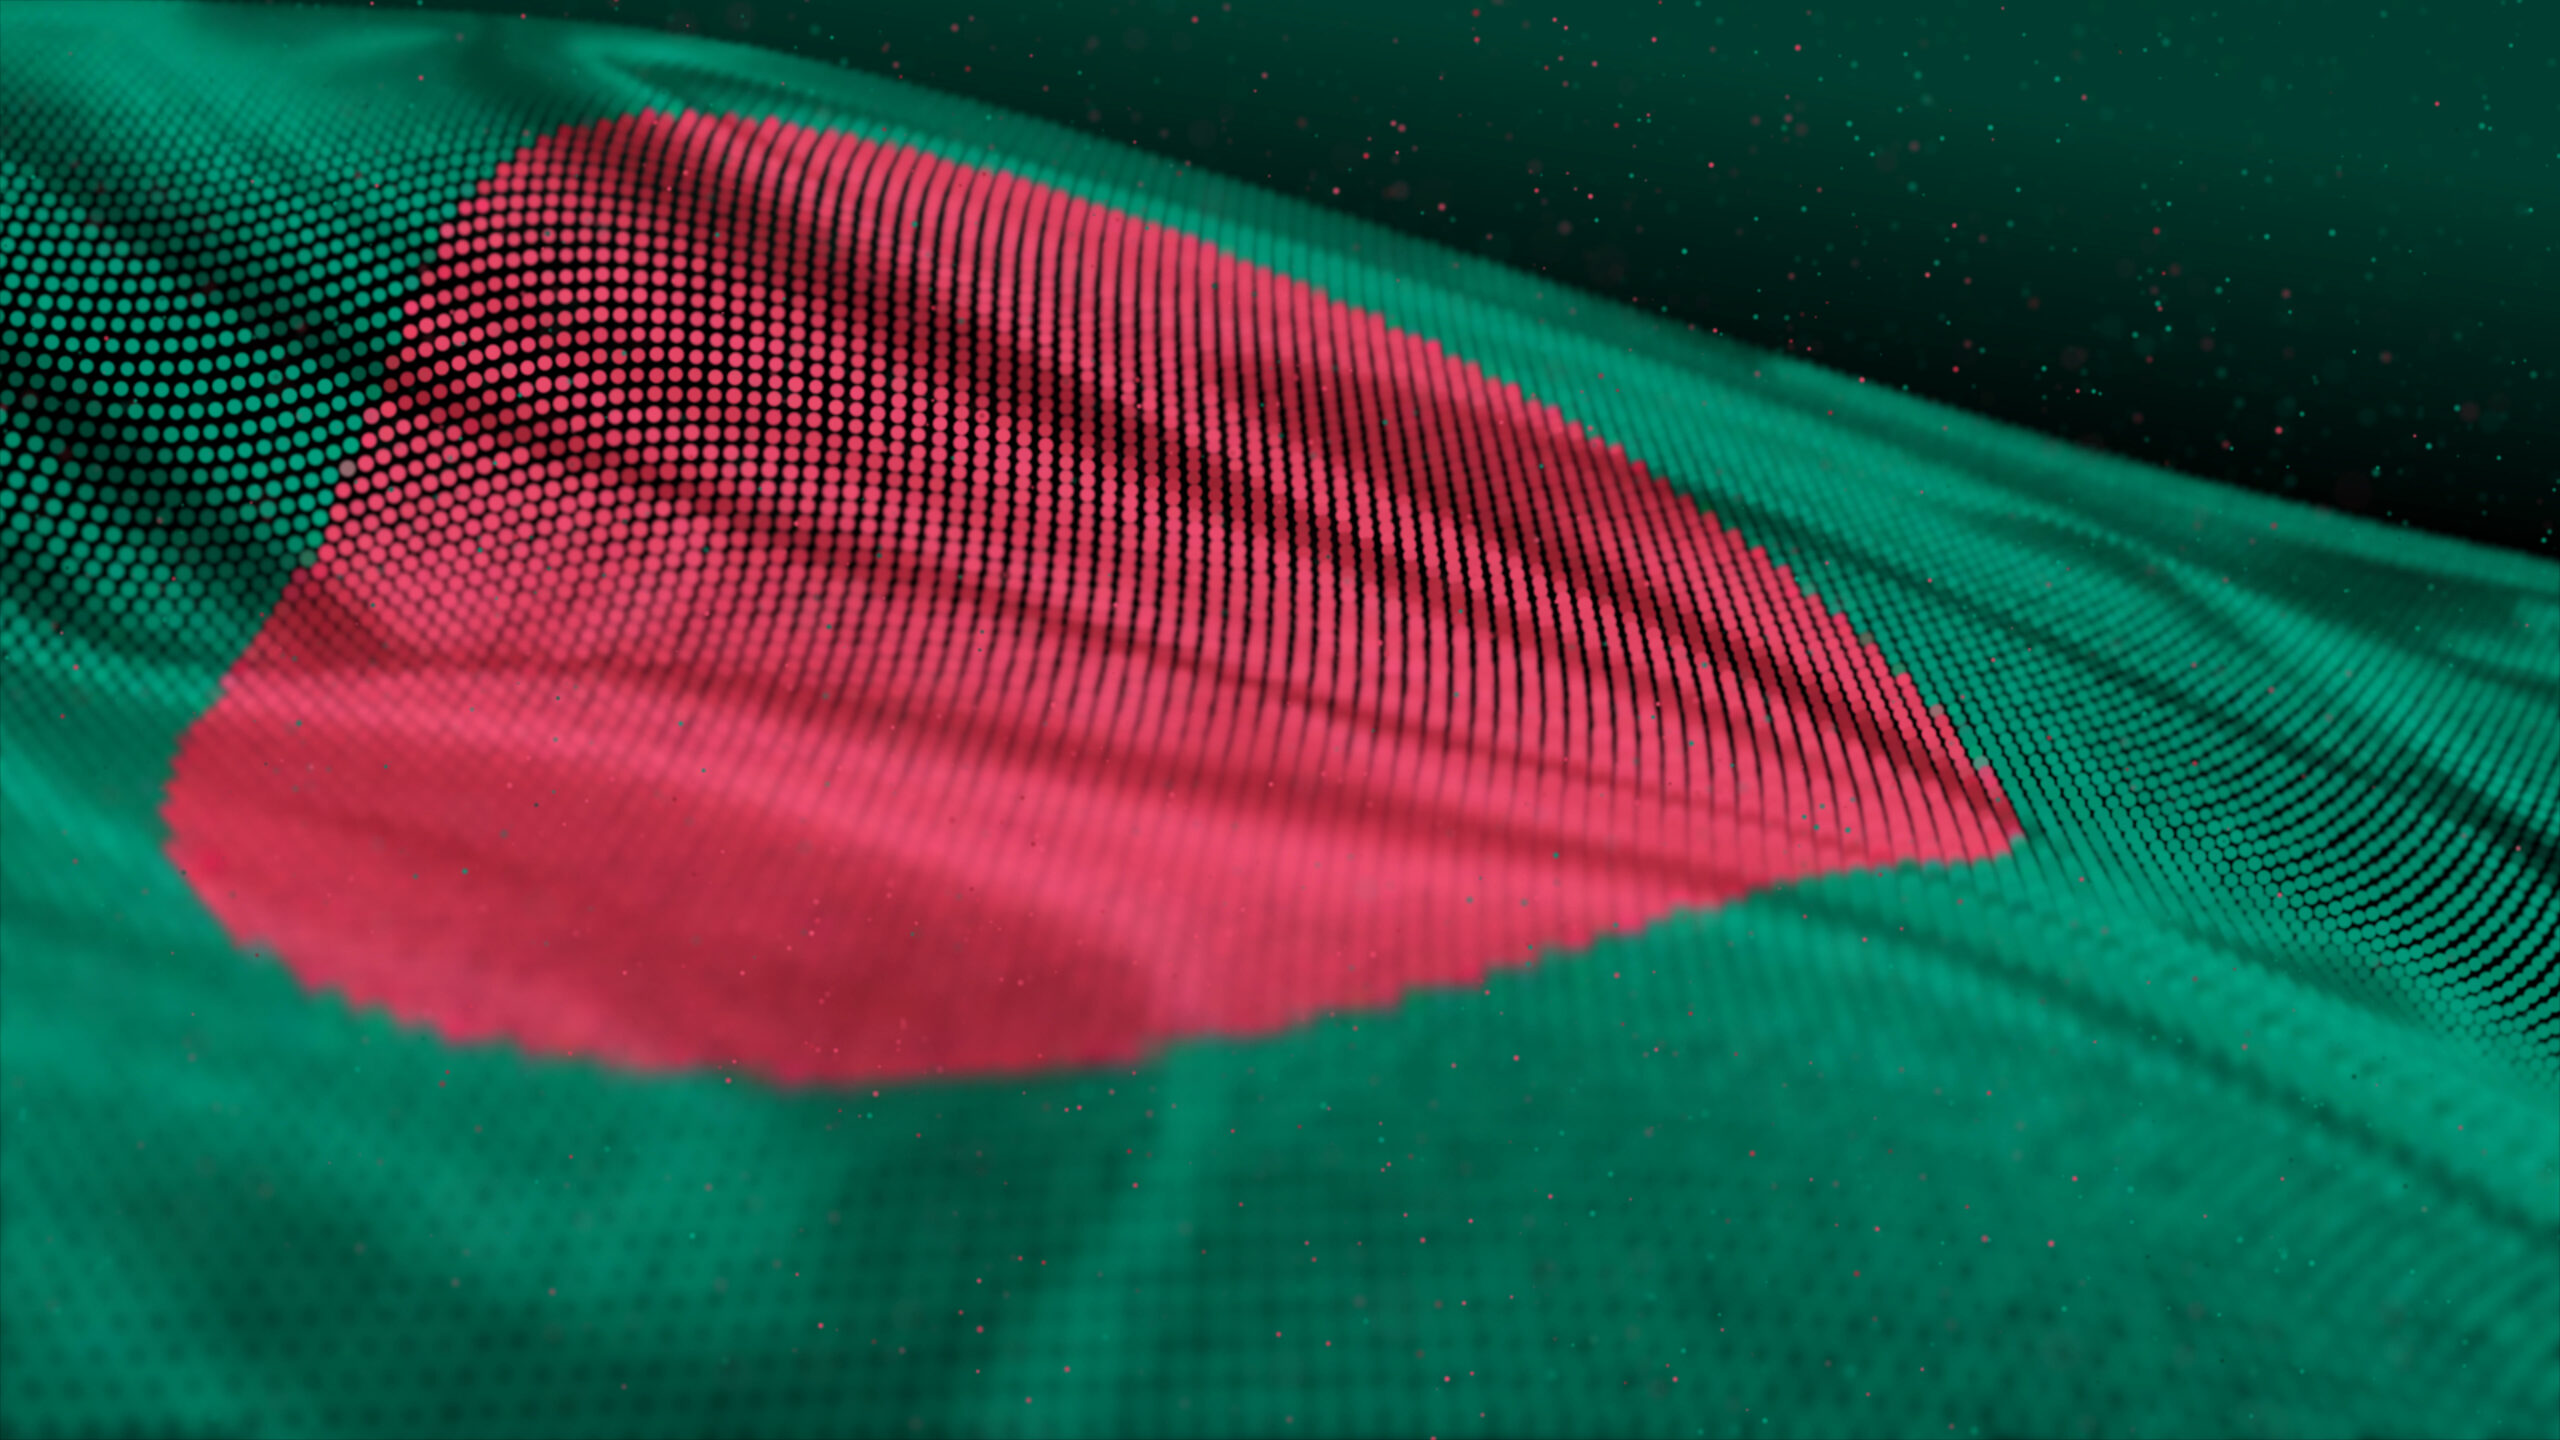 Bangladeshi Elections Come into DDoS Crosshairs